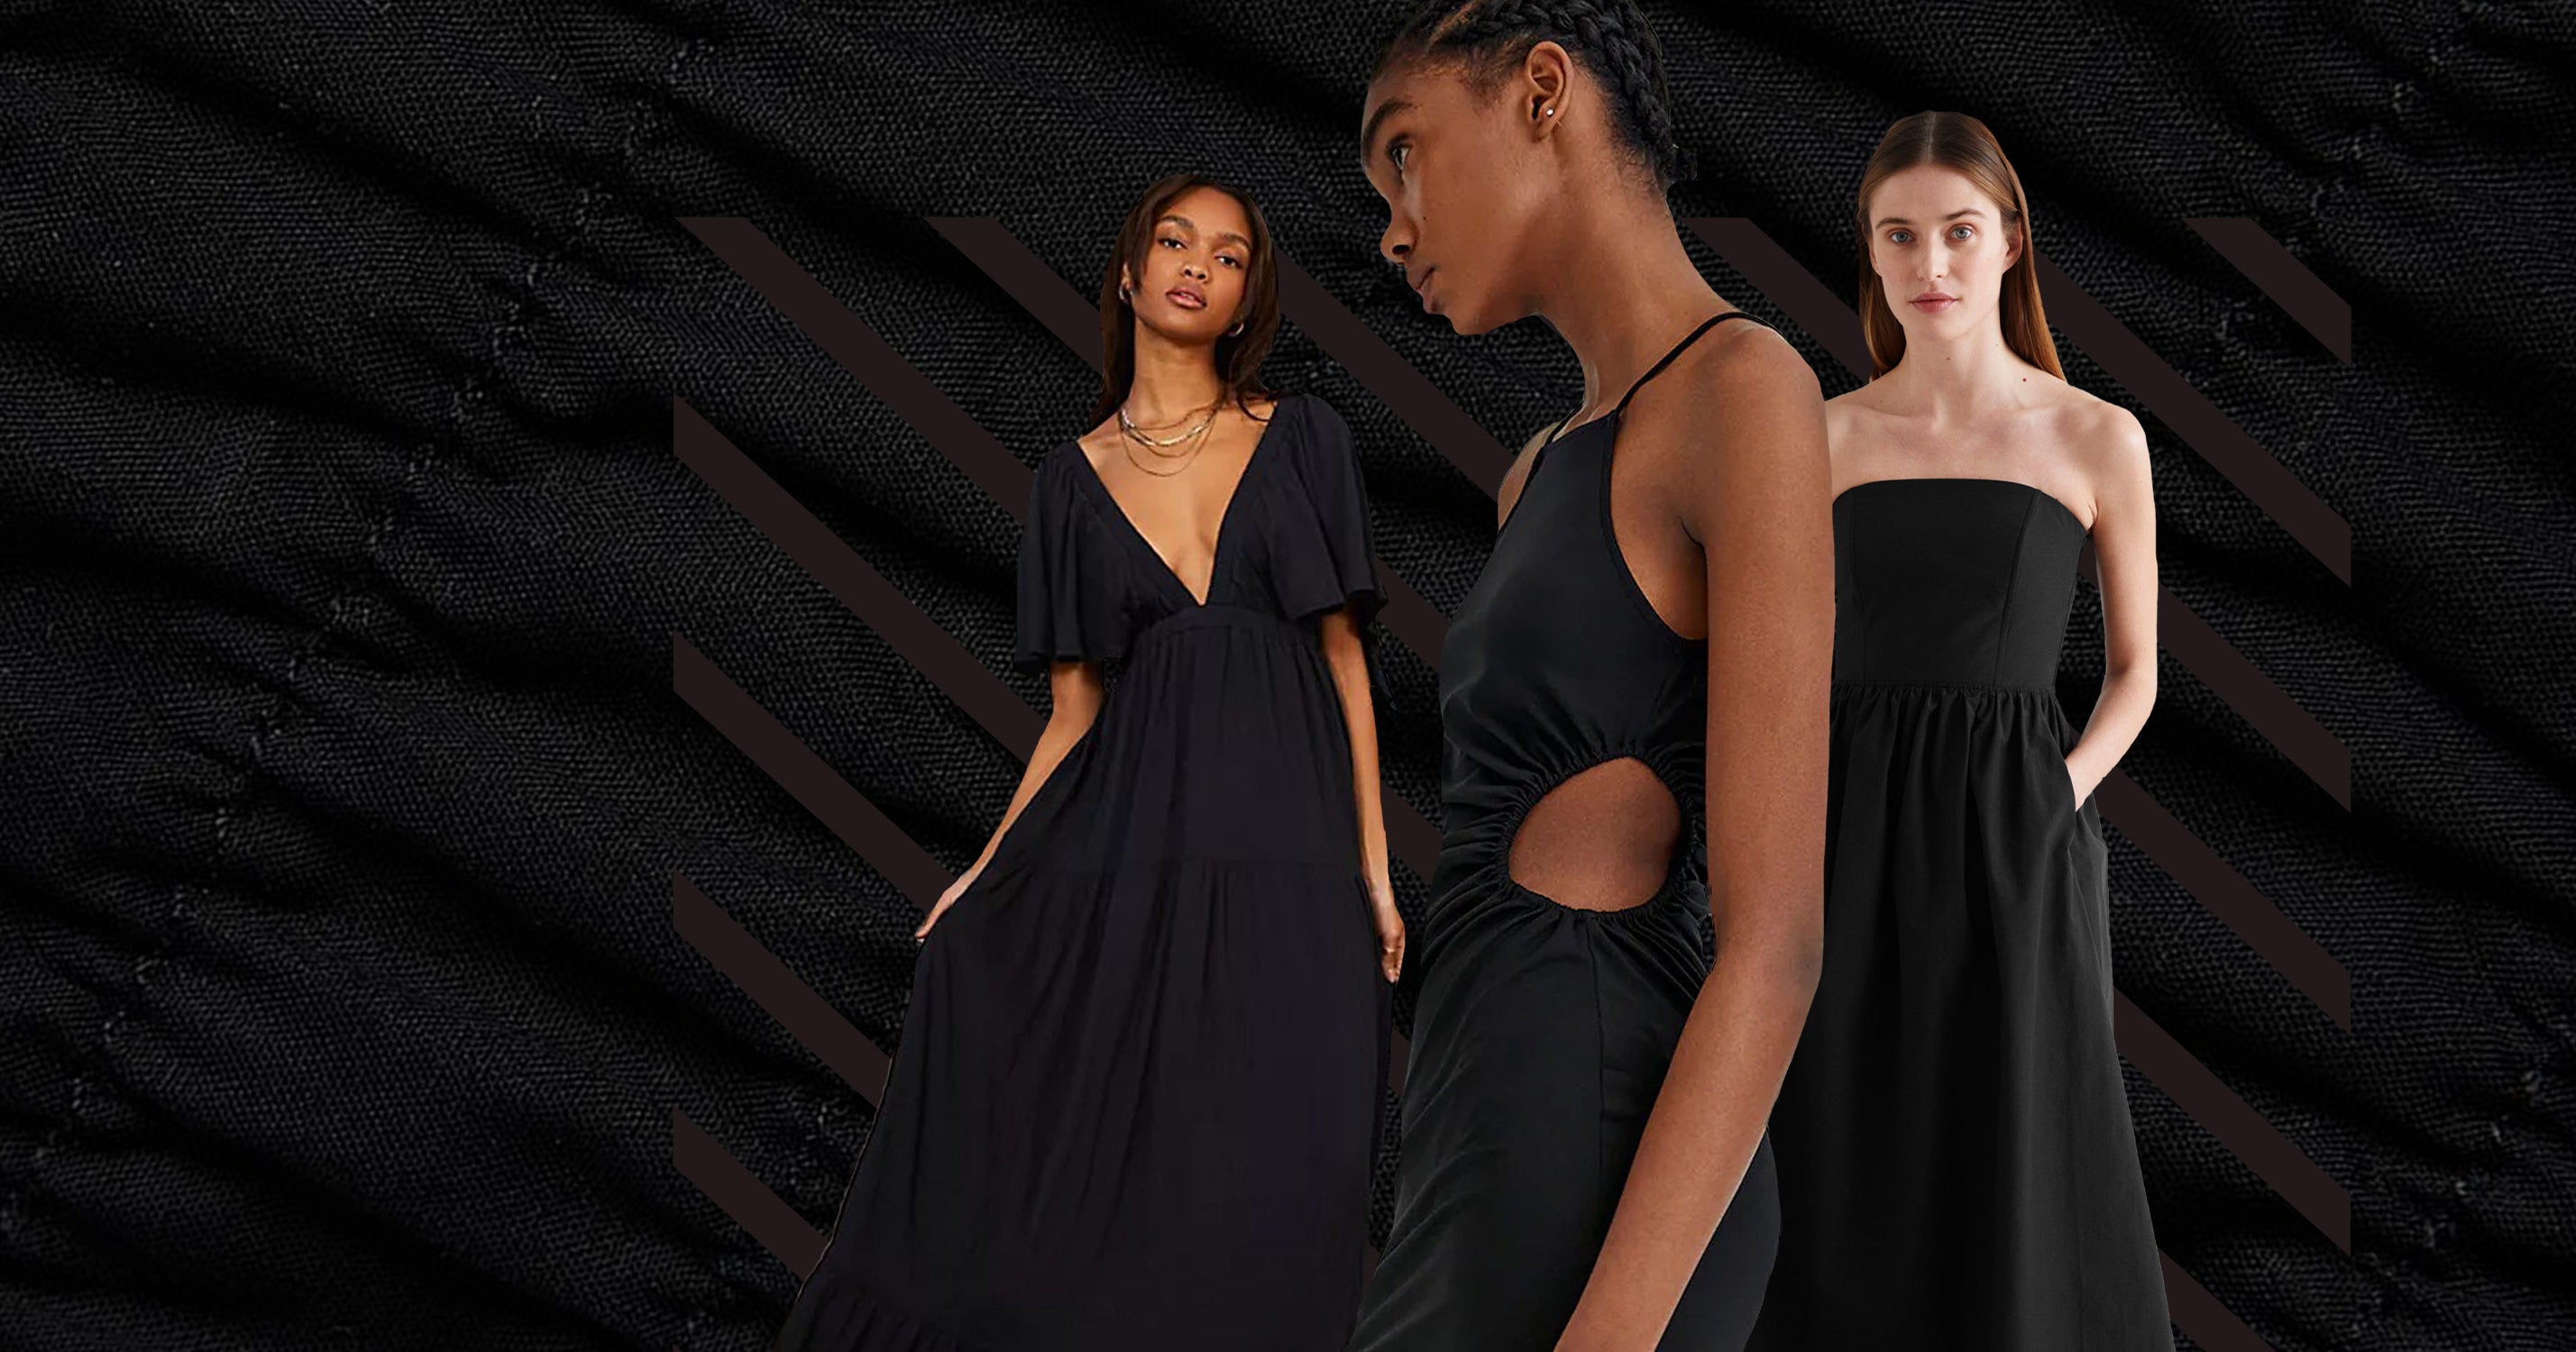 Black Beautiful Dresses Online Deals, Save 50% | jlcatj.gob.mx